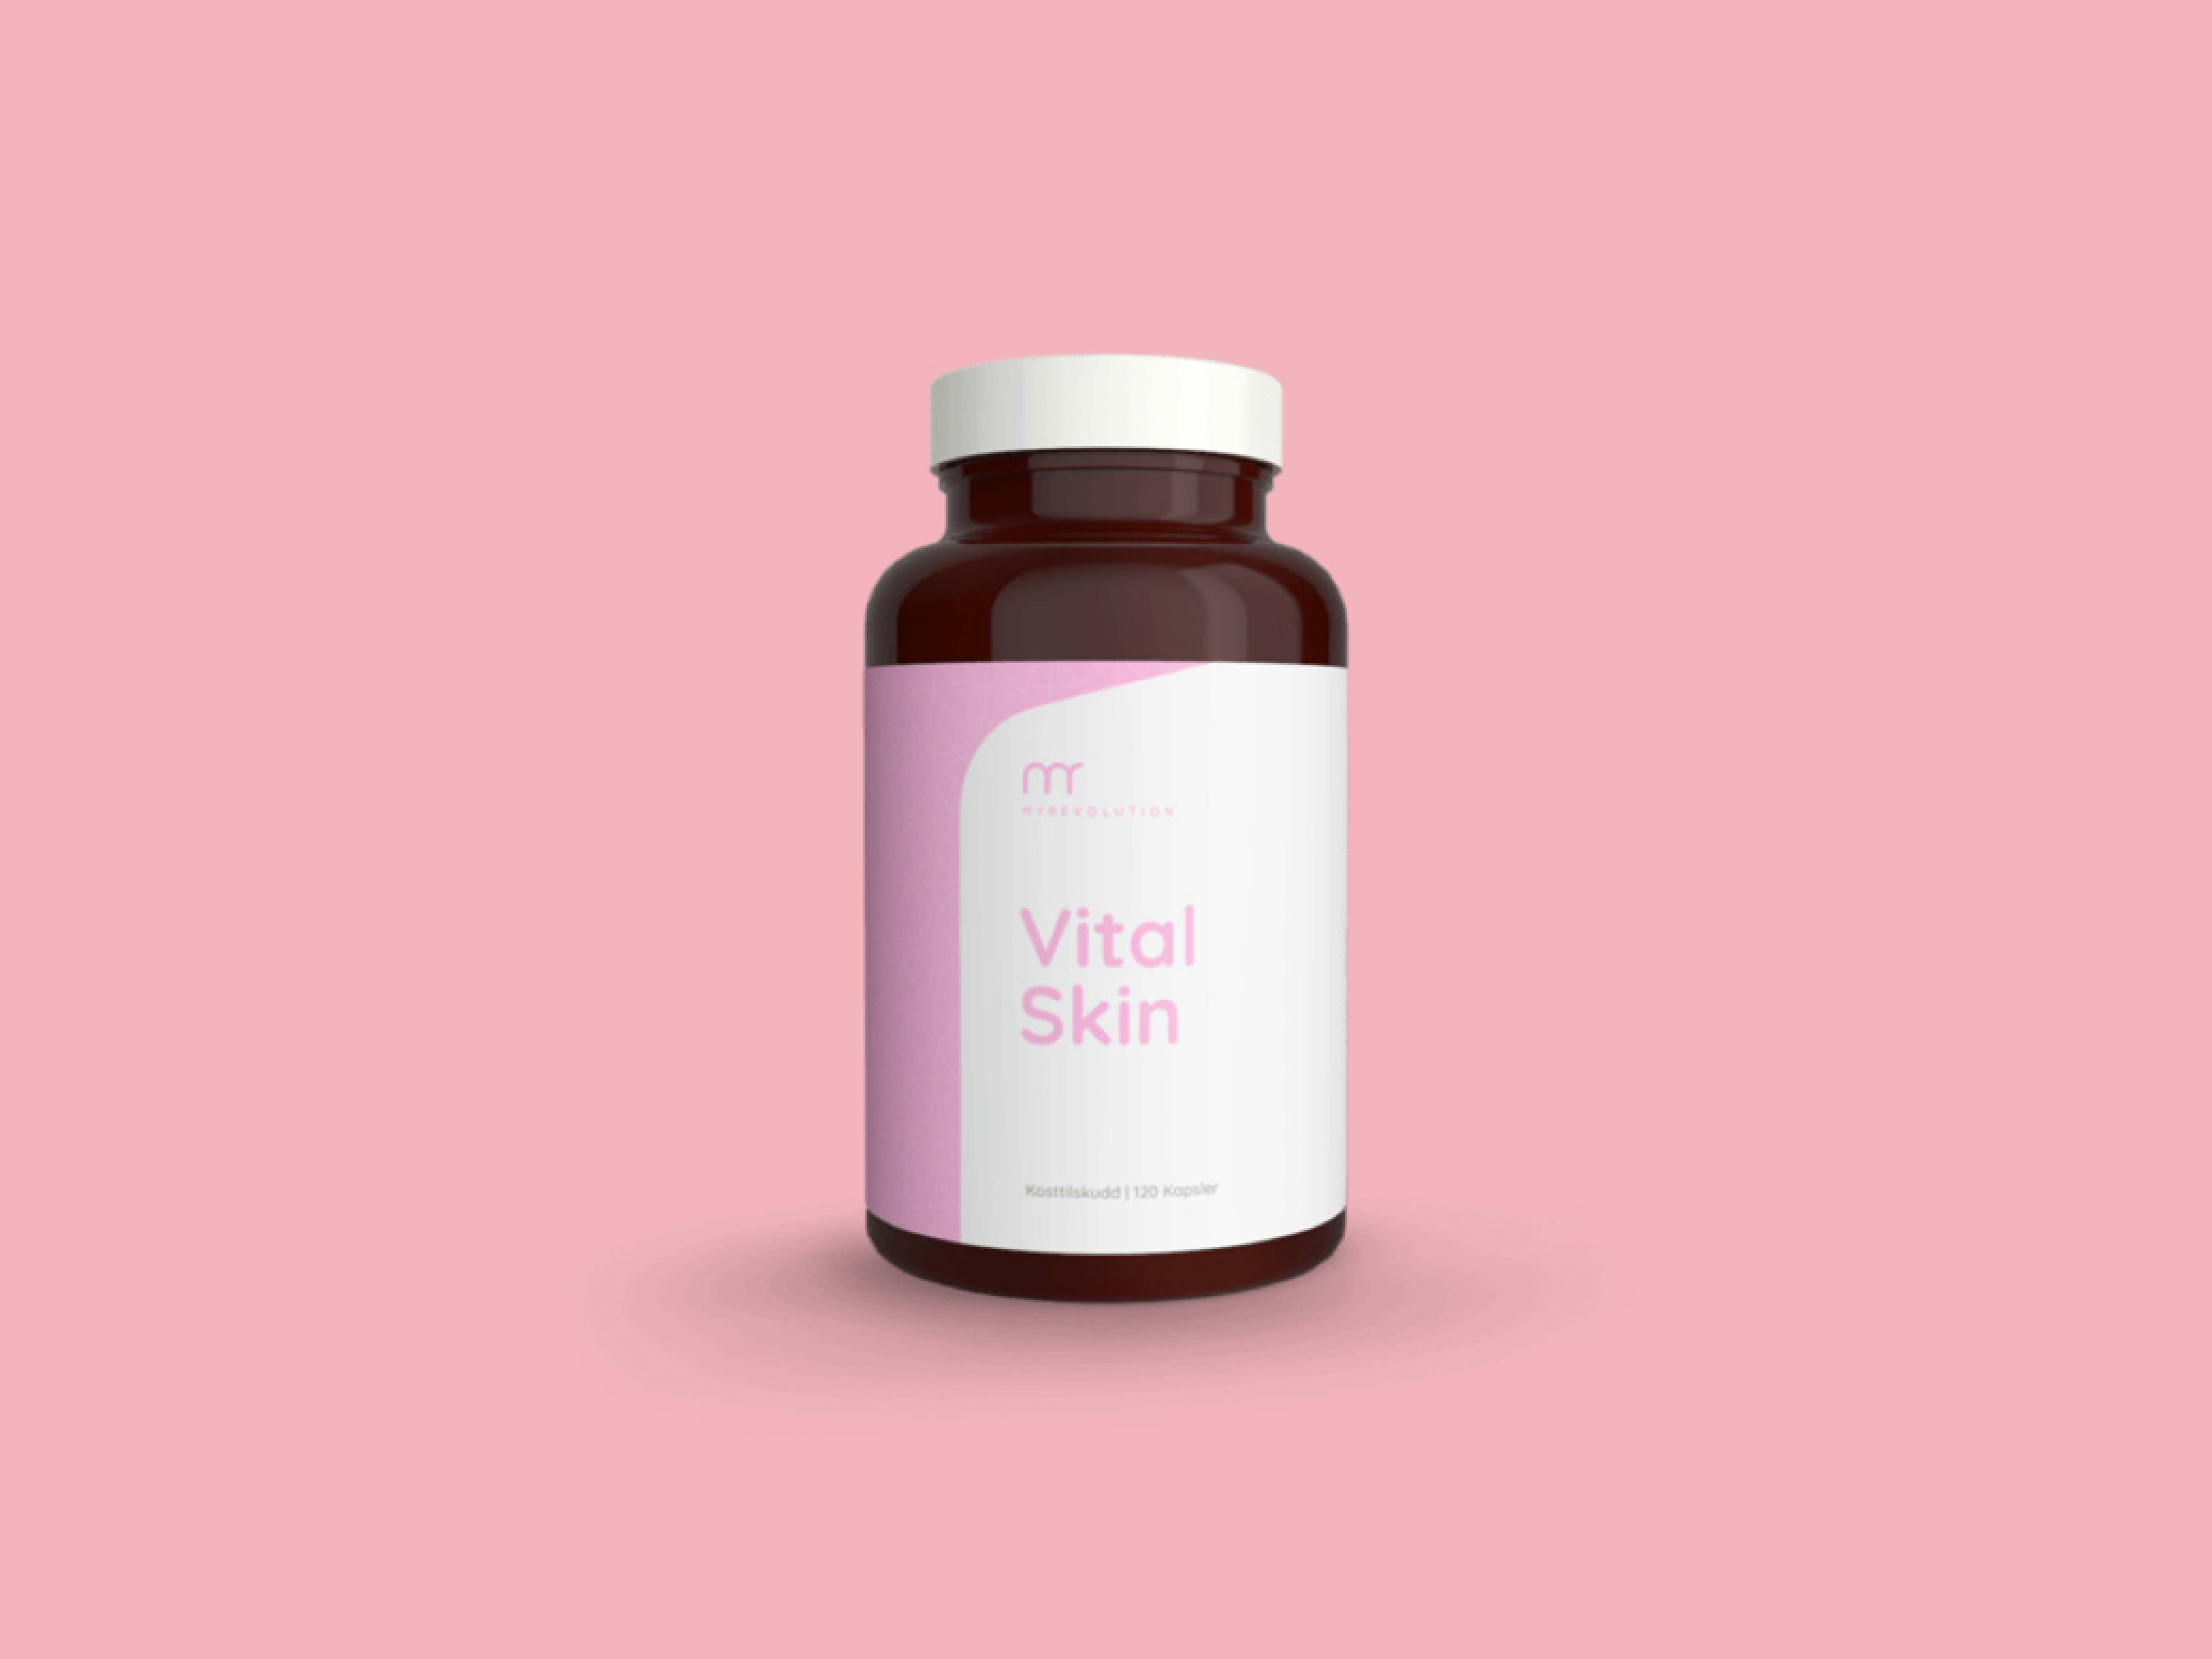 Vital Skin Packaging Design